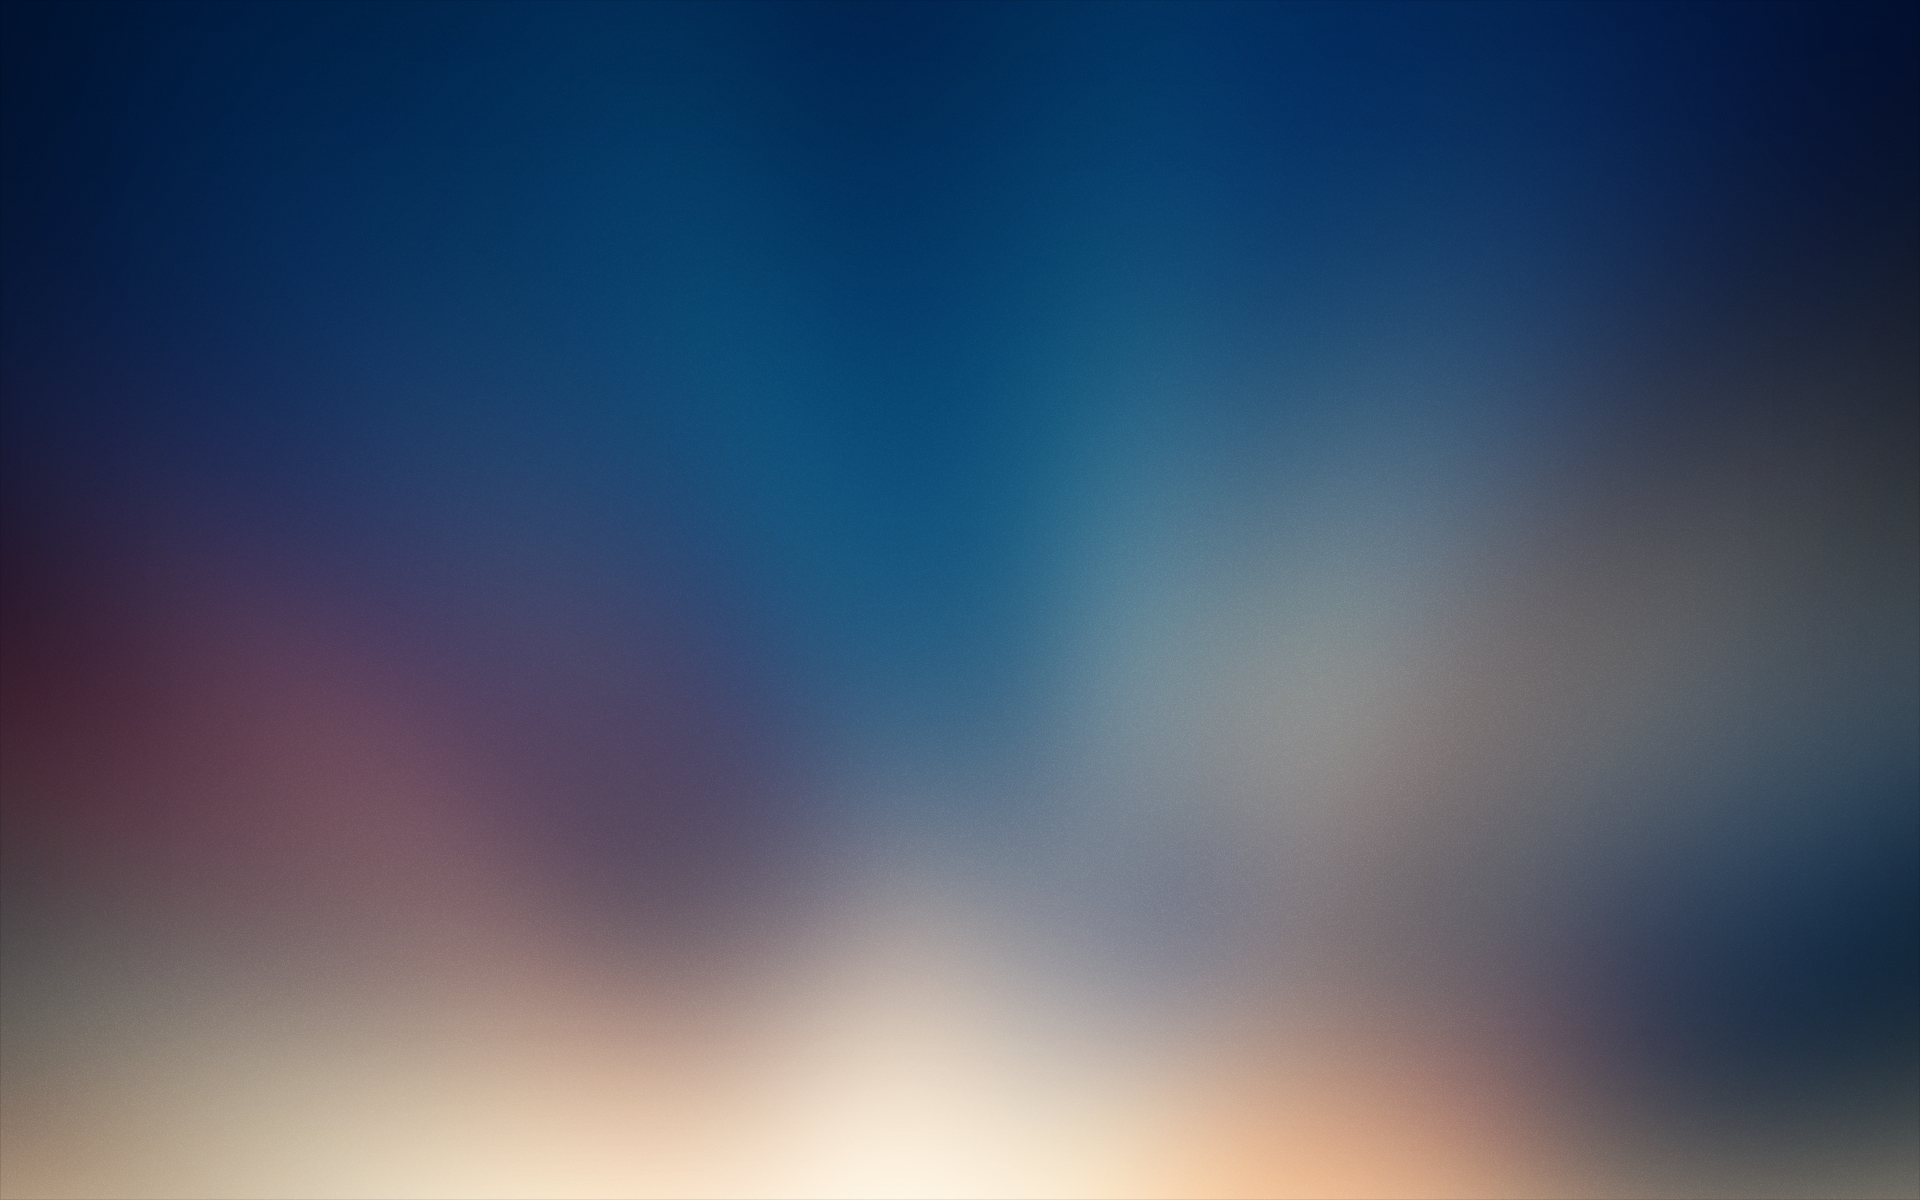 Abstract Blur Background Hd - 1920x1200 Wallpaper 